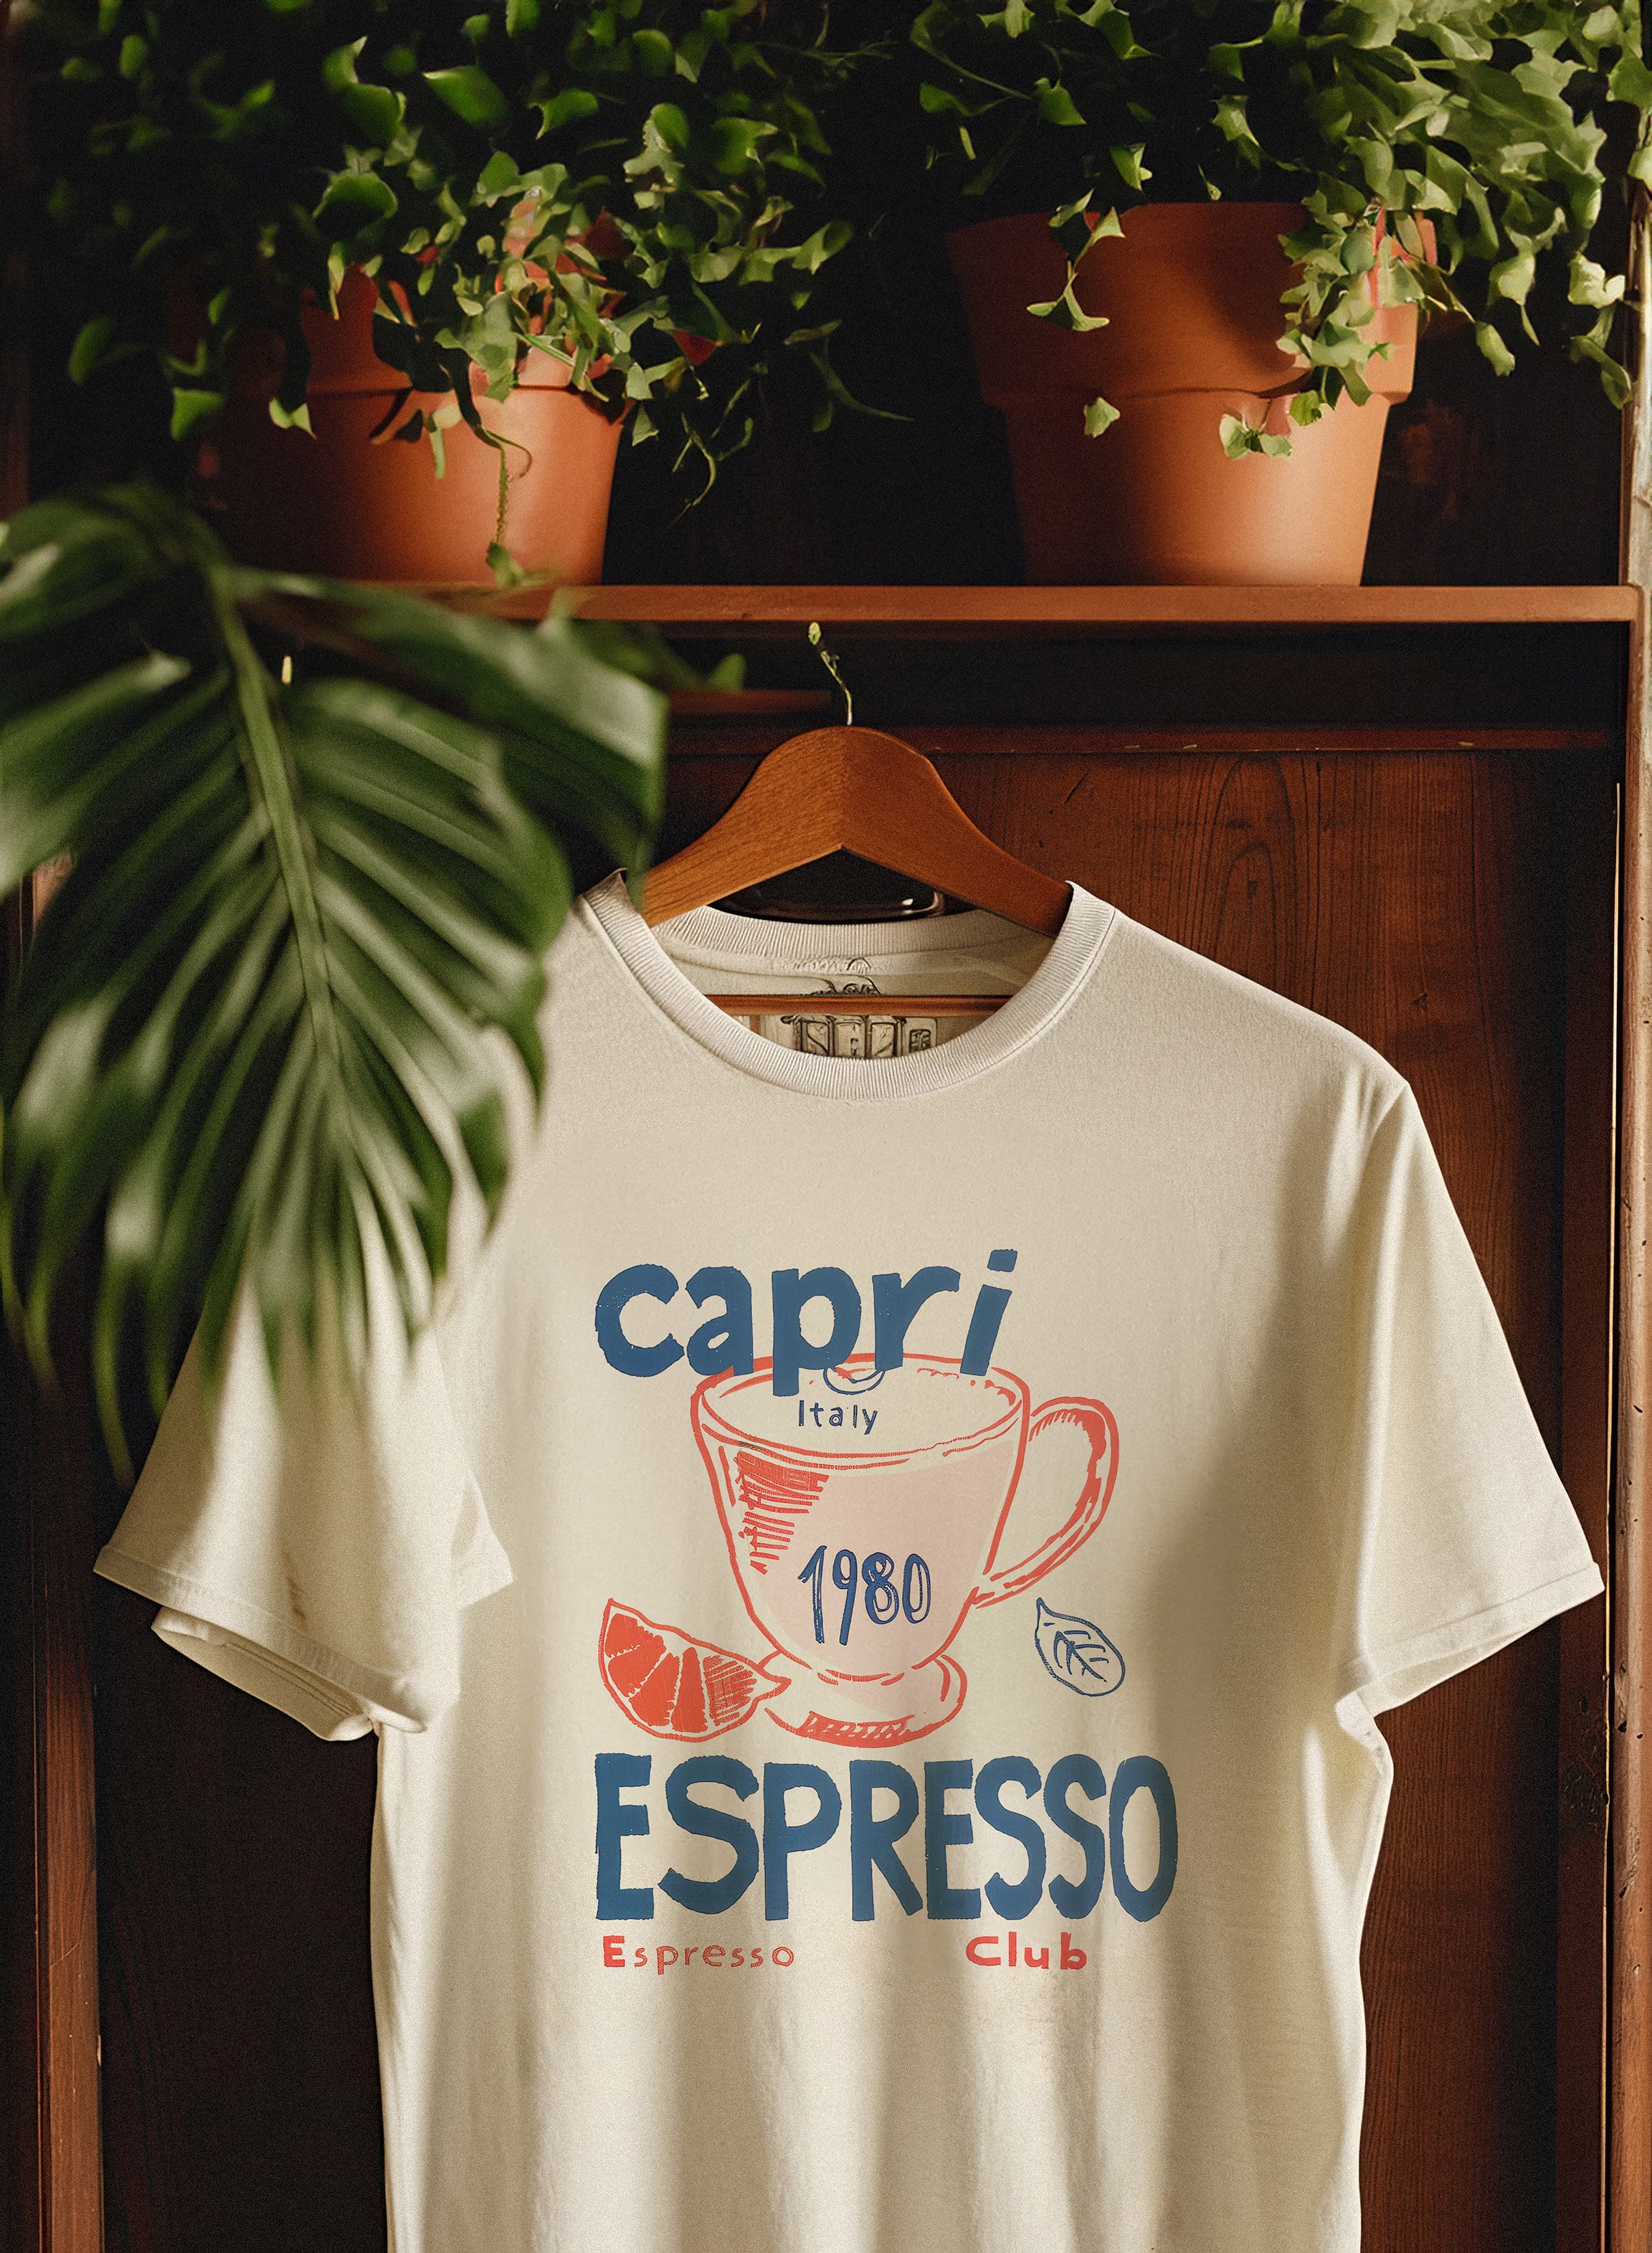 Capri Espresso Club.jpg